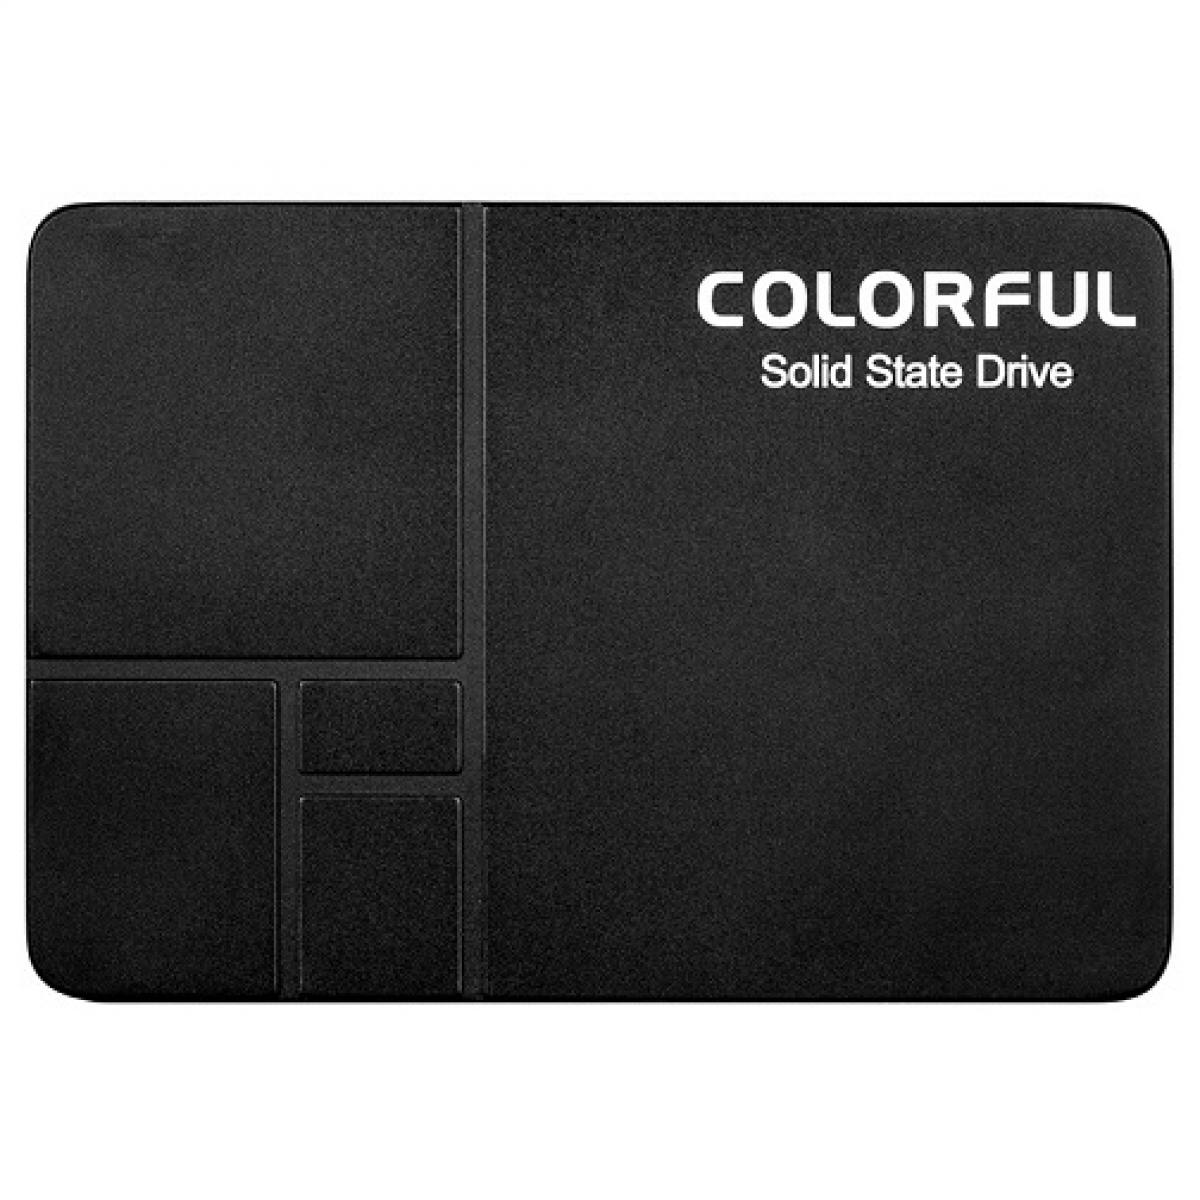 SSD Colorful SL300 120Gb